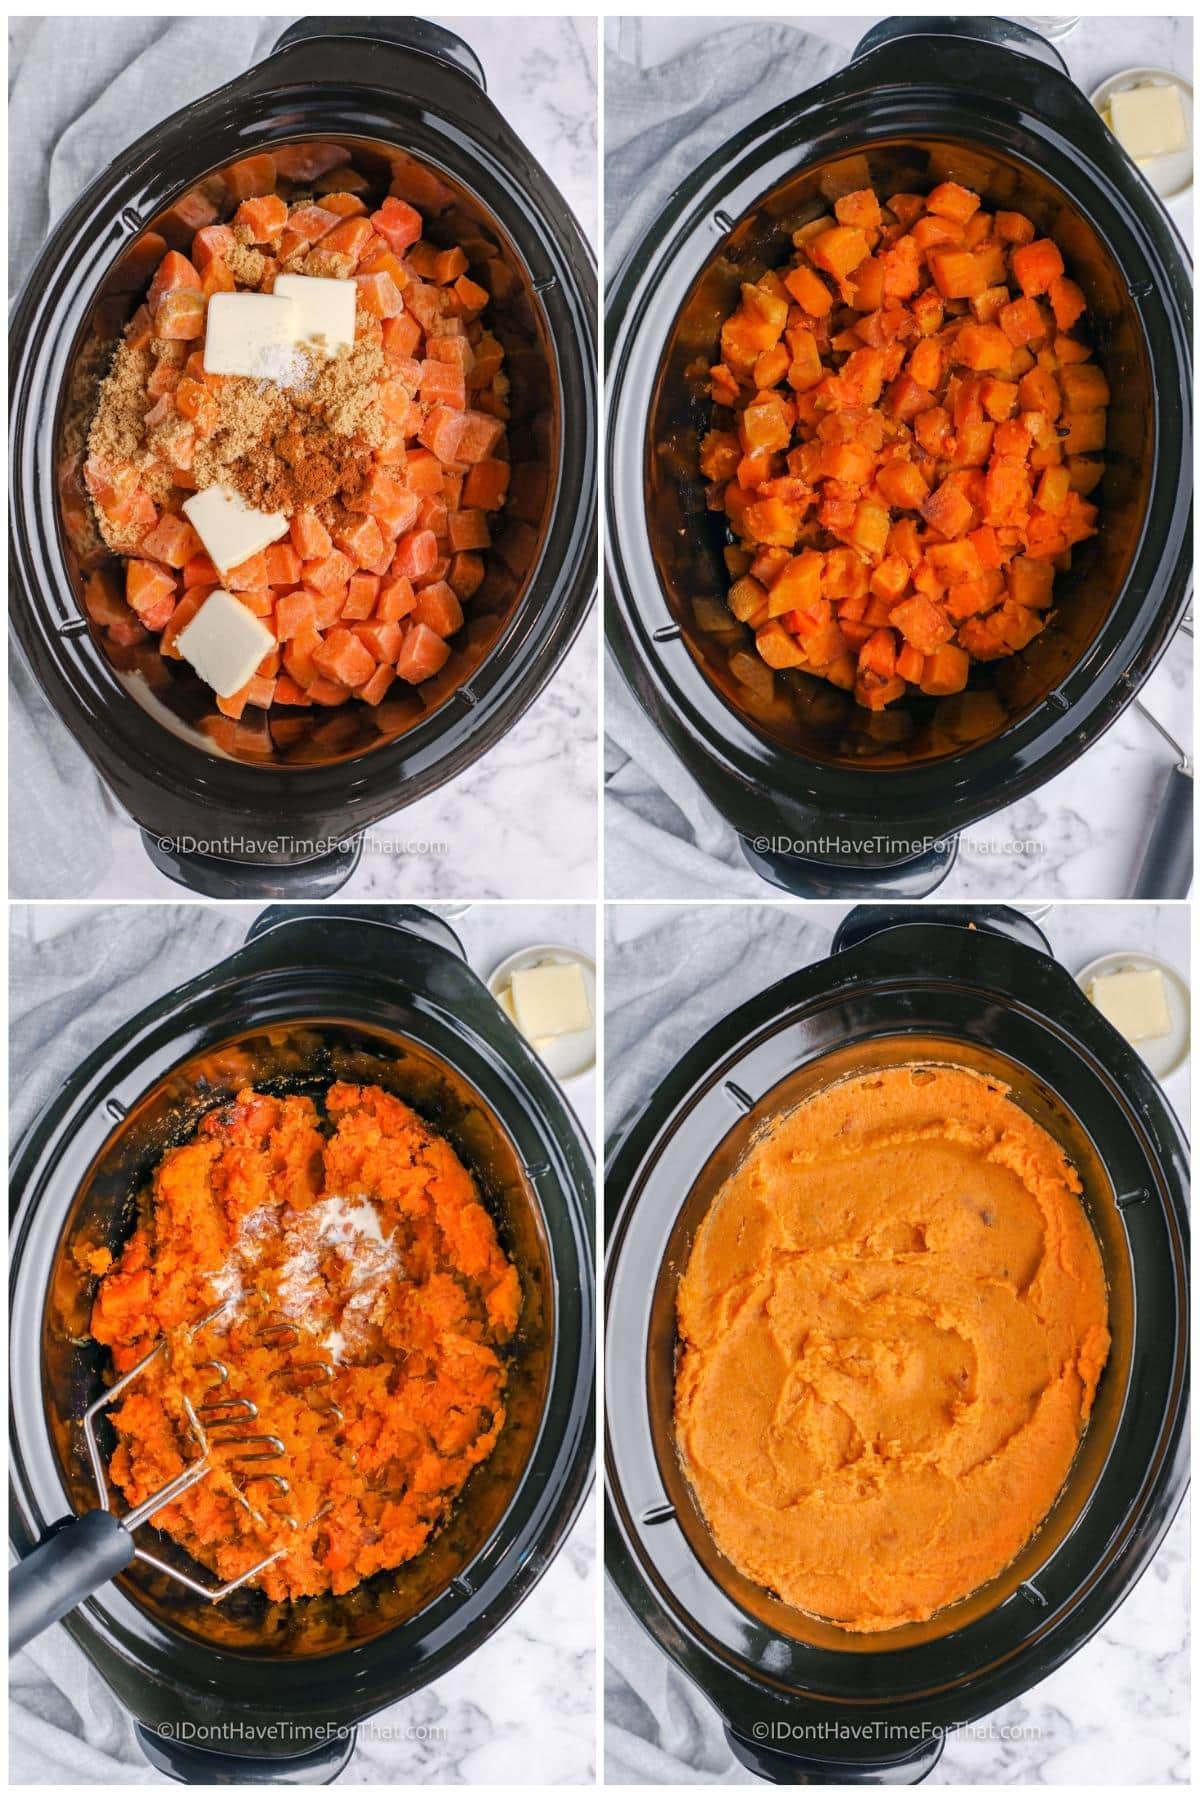 process of adding ingredients together to make Crockpot Sweet Potato Casserole